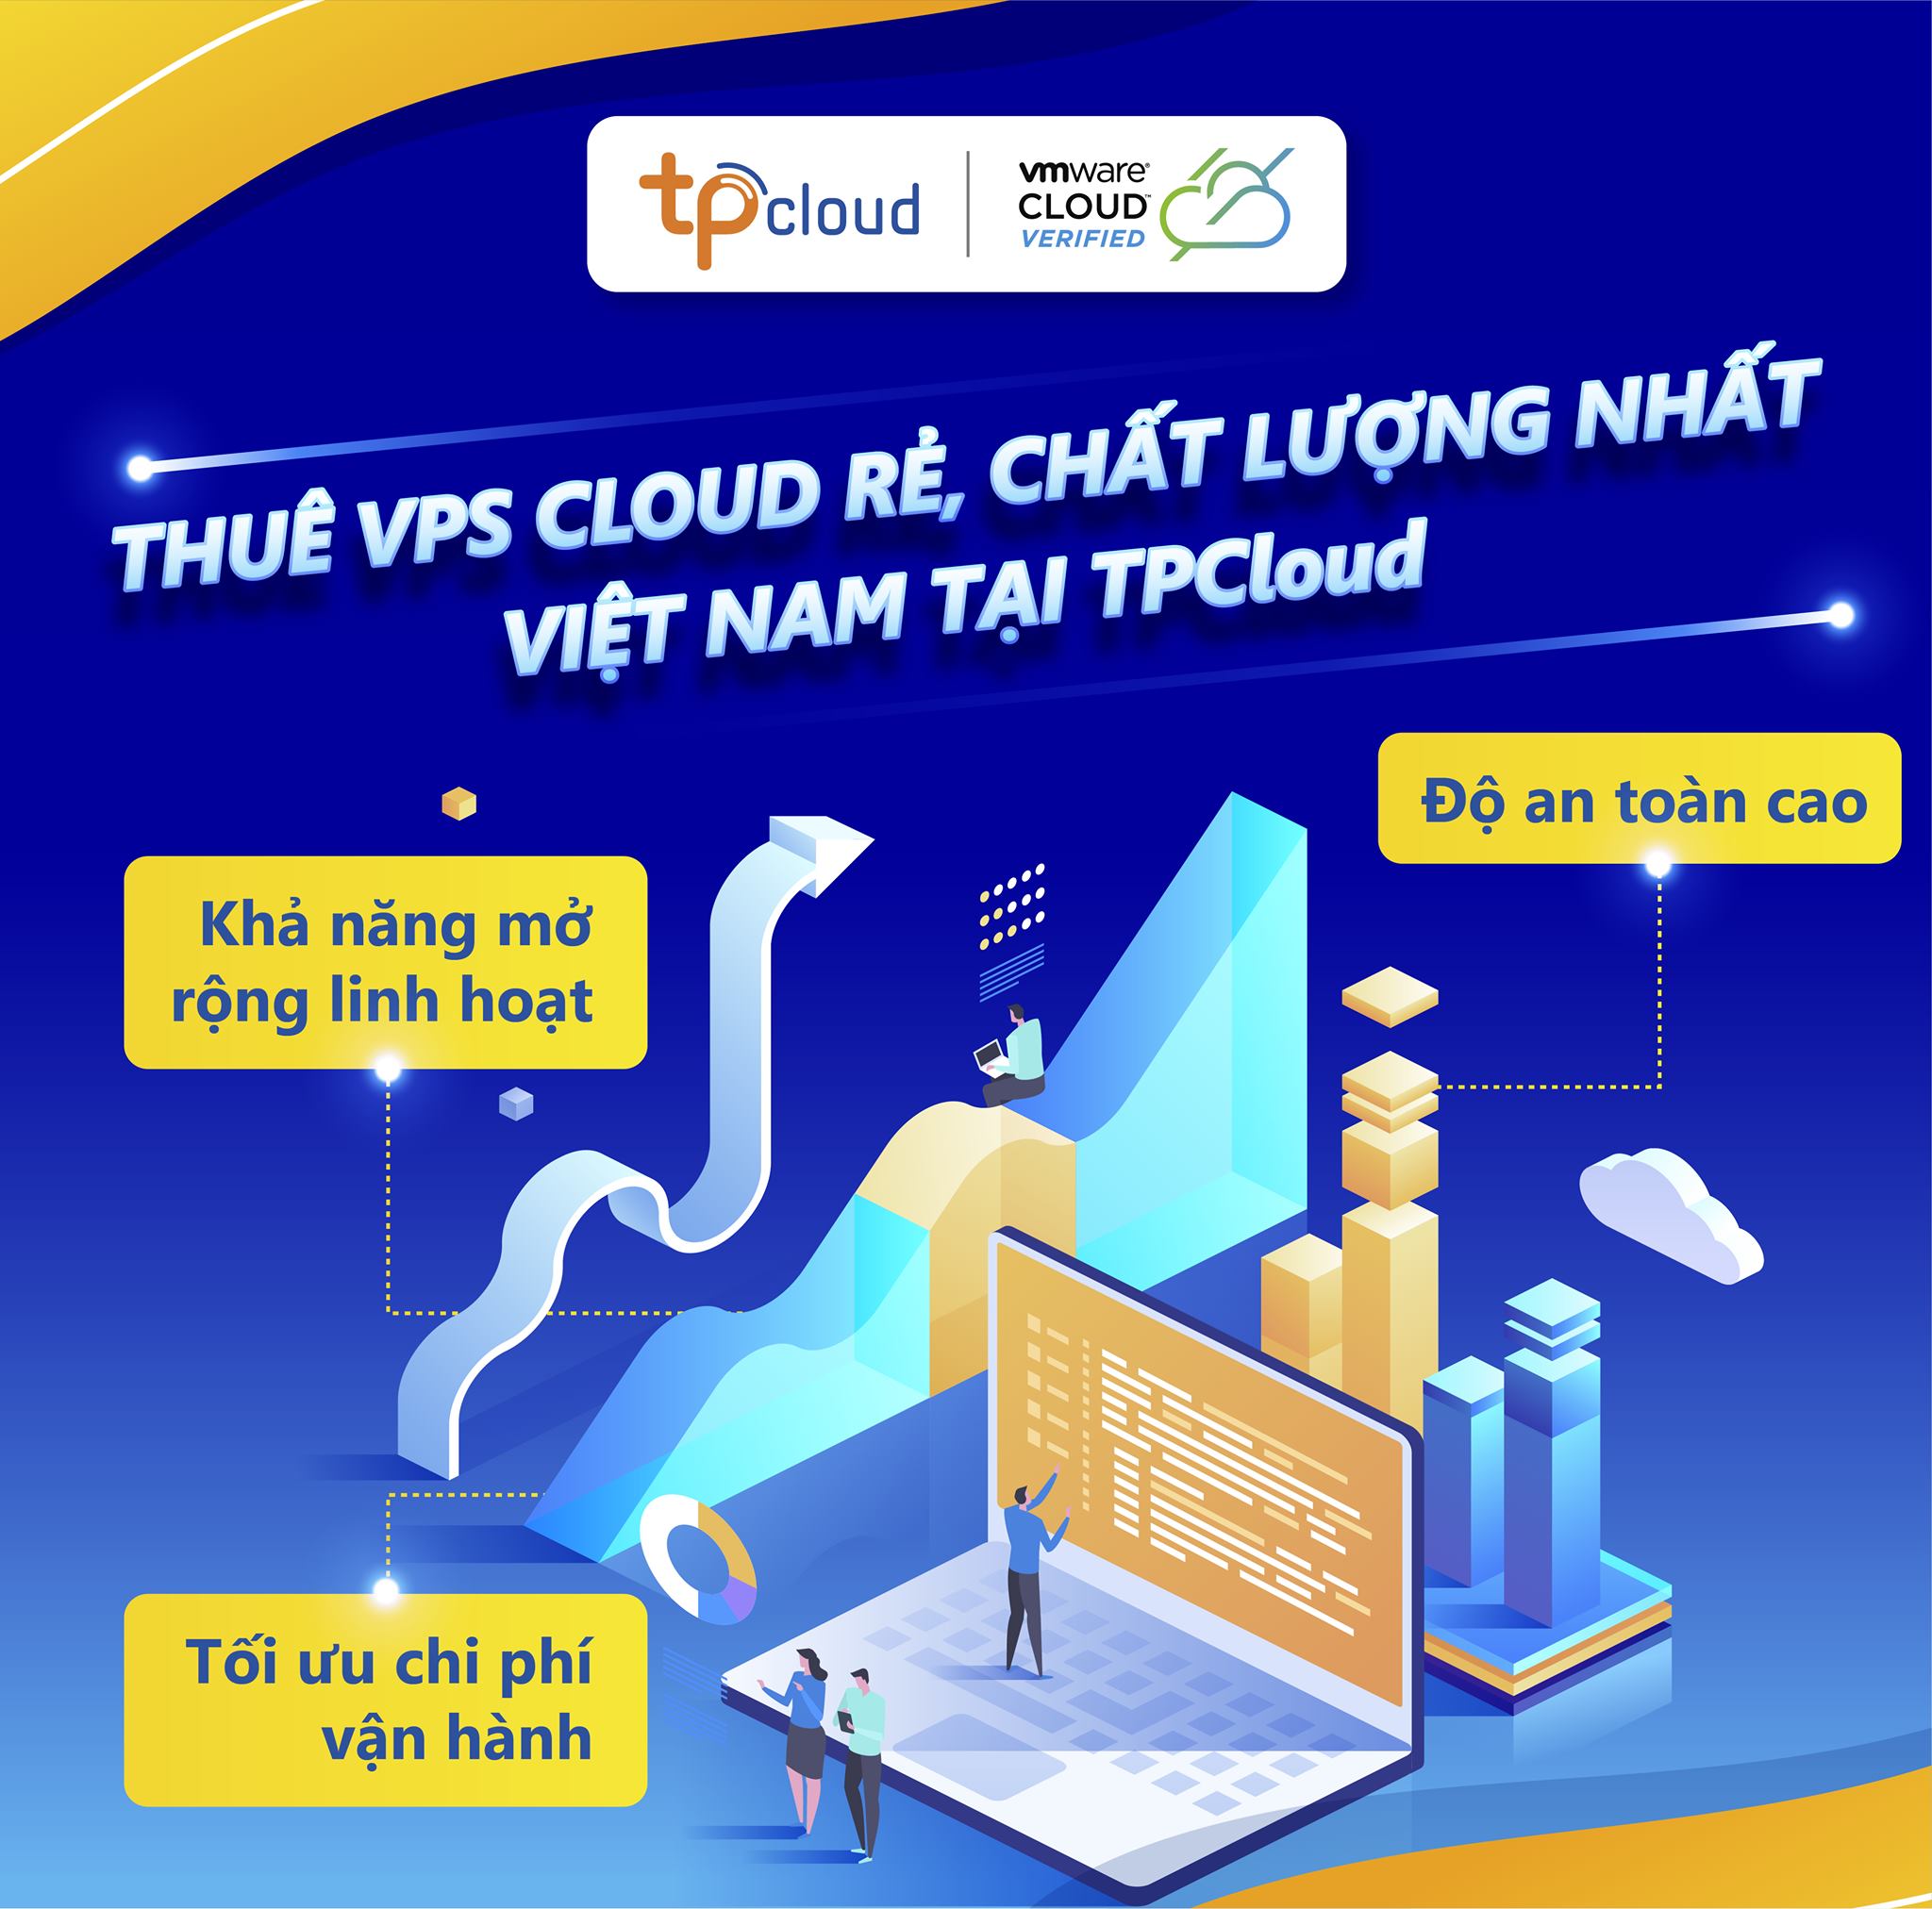 thue-vps-cloud-chat-luong-nhat-viet-nam-tai-tpcloud